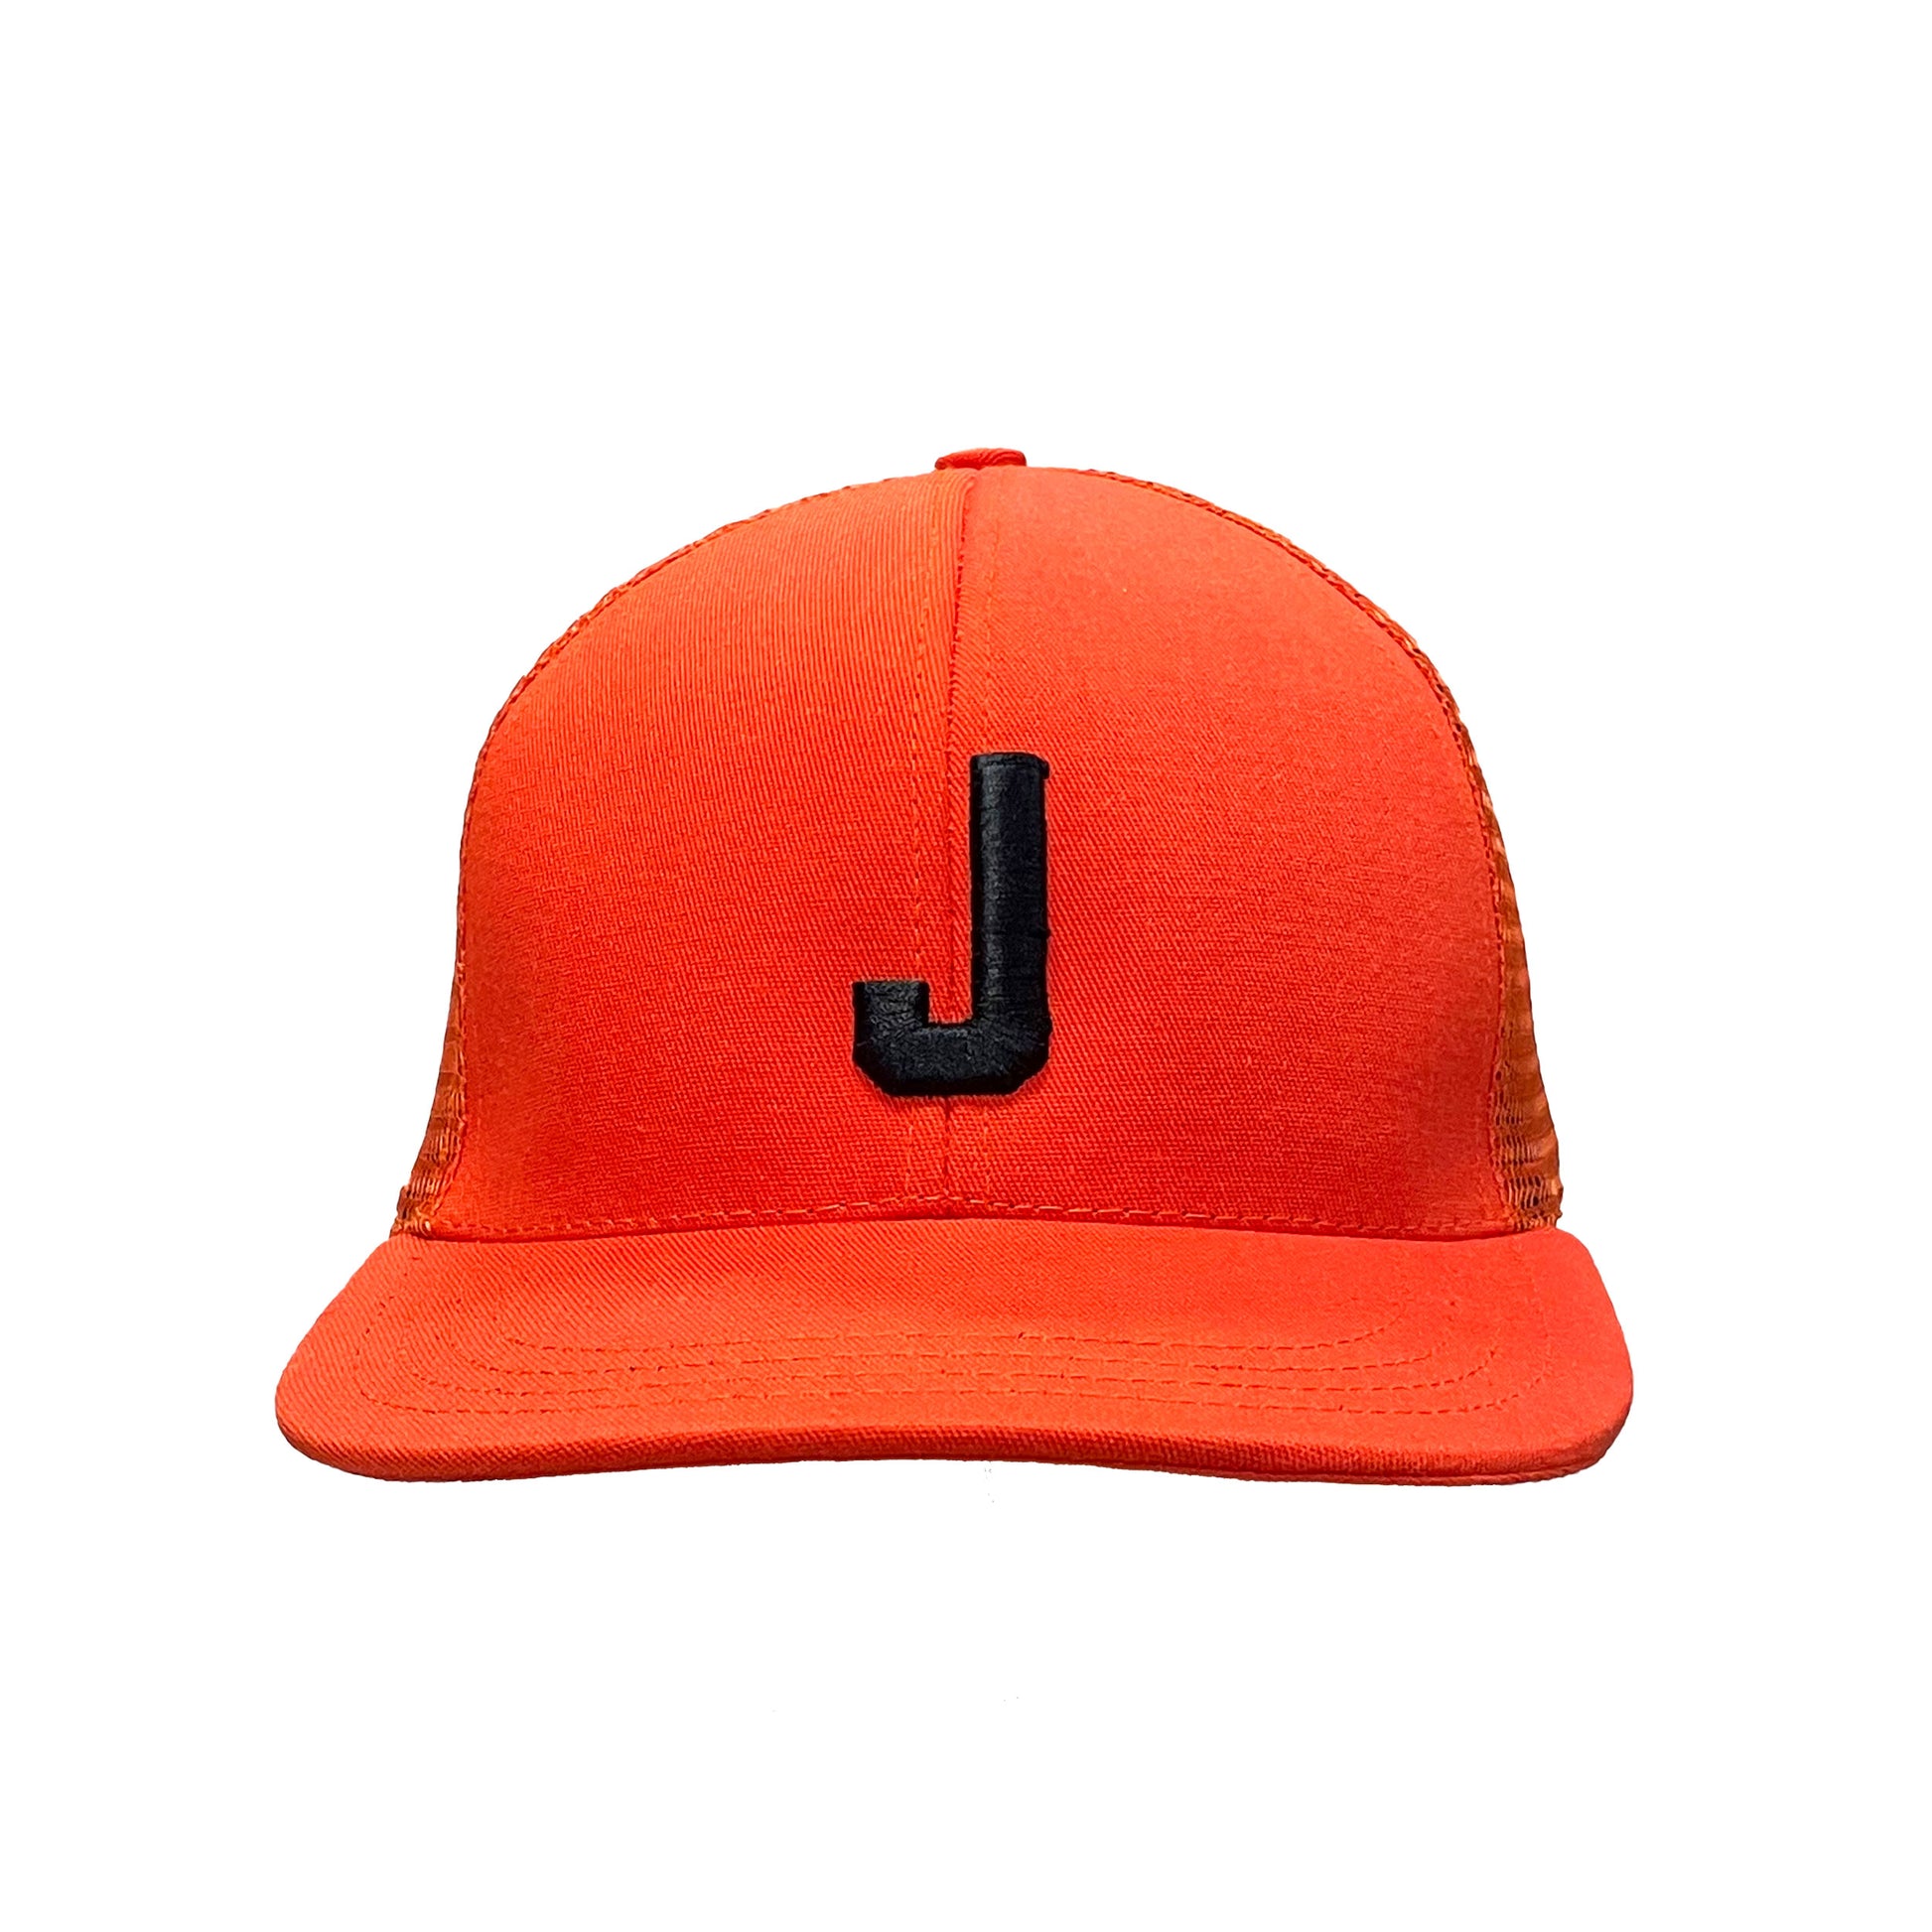 J Orange Trucker hat